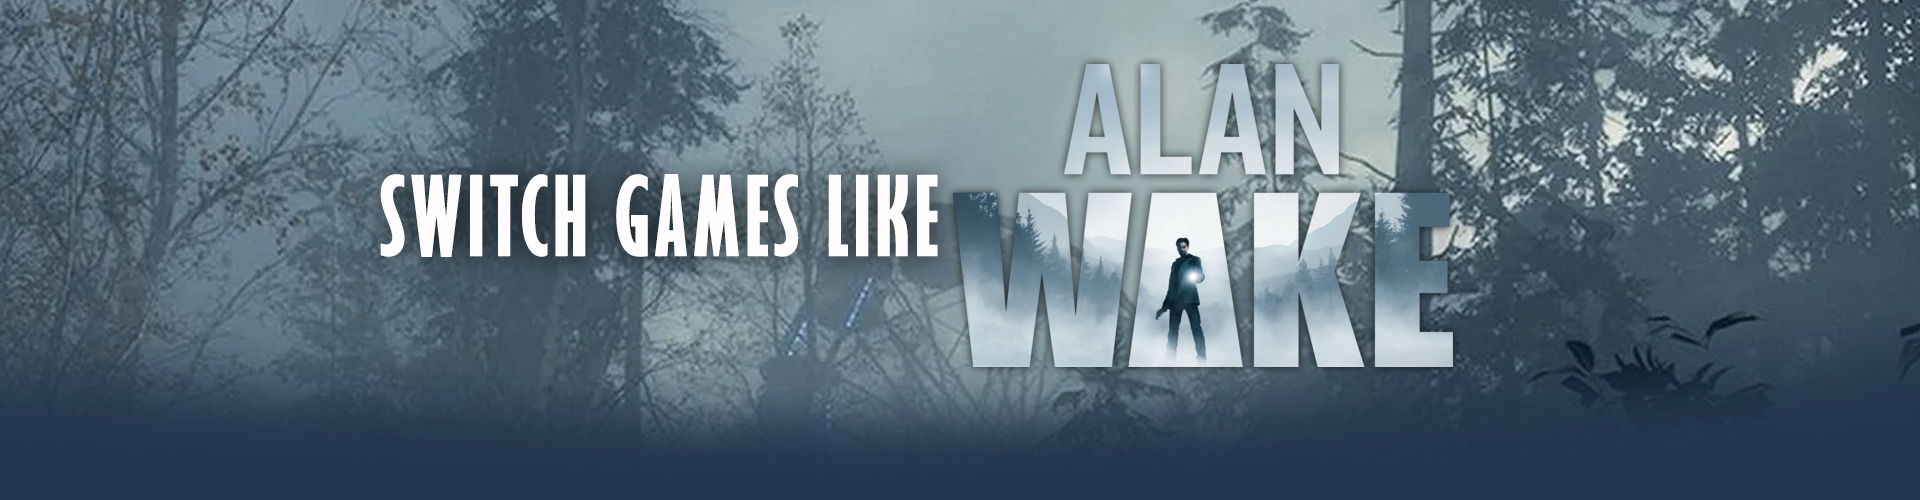 Switch-games zoals Alan Wake